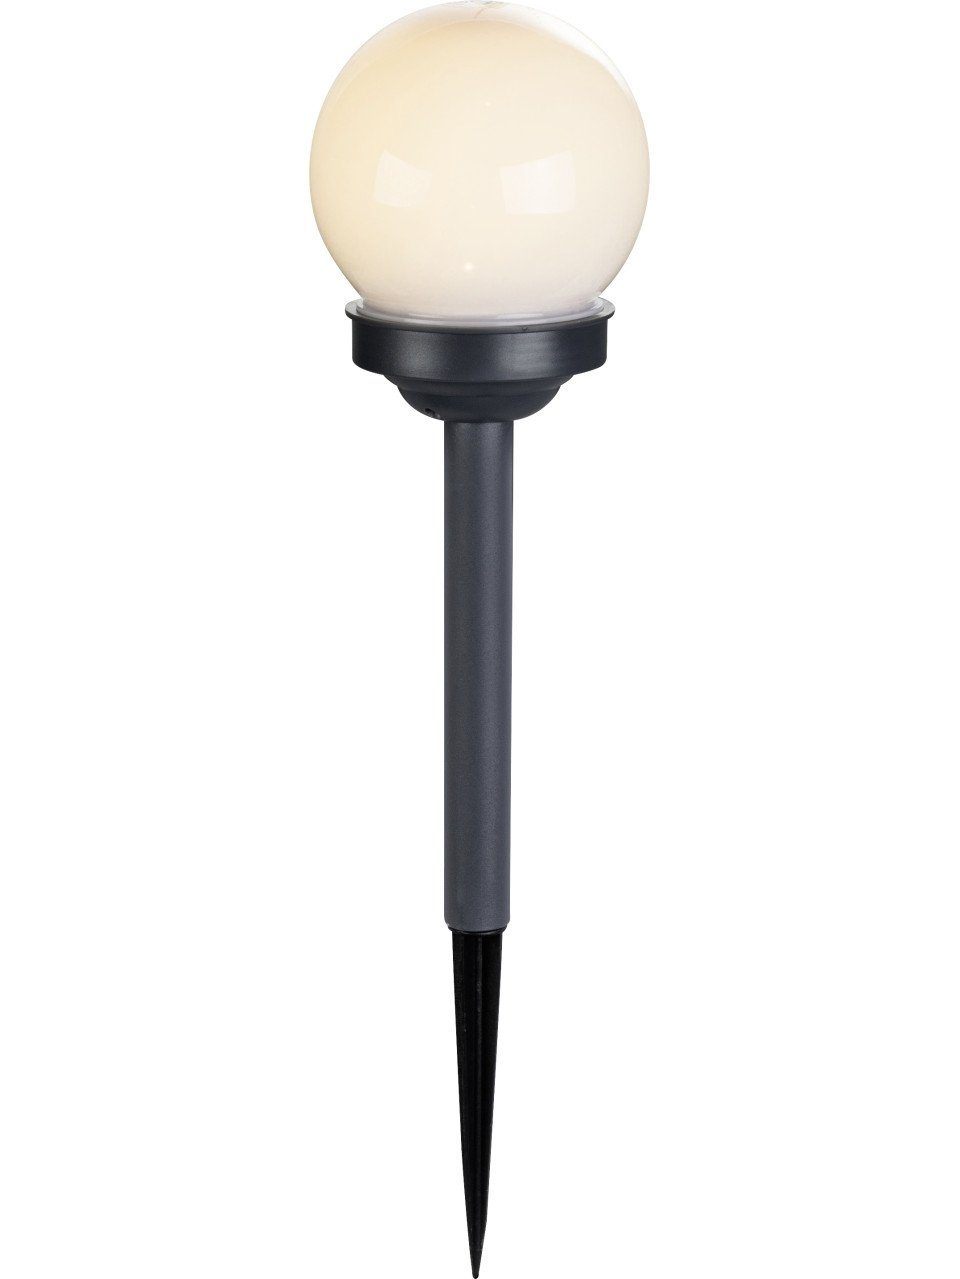 x 10 35 Außen-Stehlampe LED Globo cm, Globo Solarleuchte Bewegungsmelder grau LED, Ohne